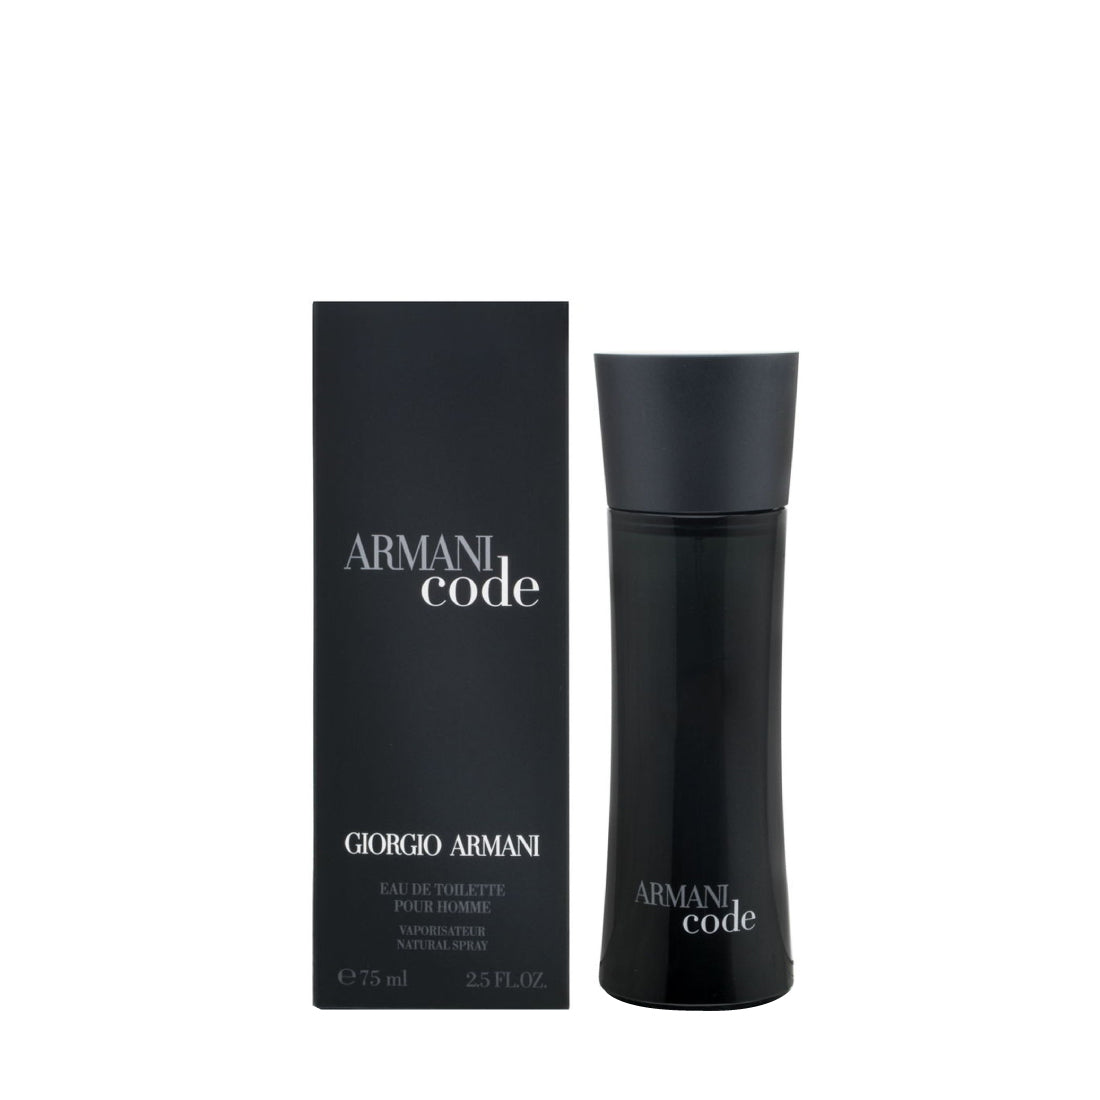 Giorgio Armani Armani Code Men's Eau de Toilette Spray - 6.7 fl oz bottle